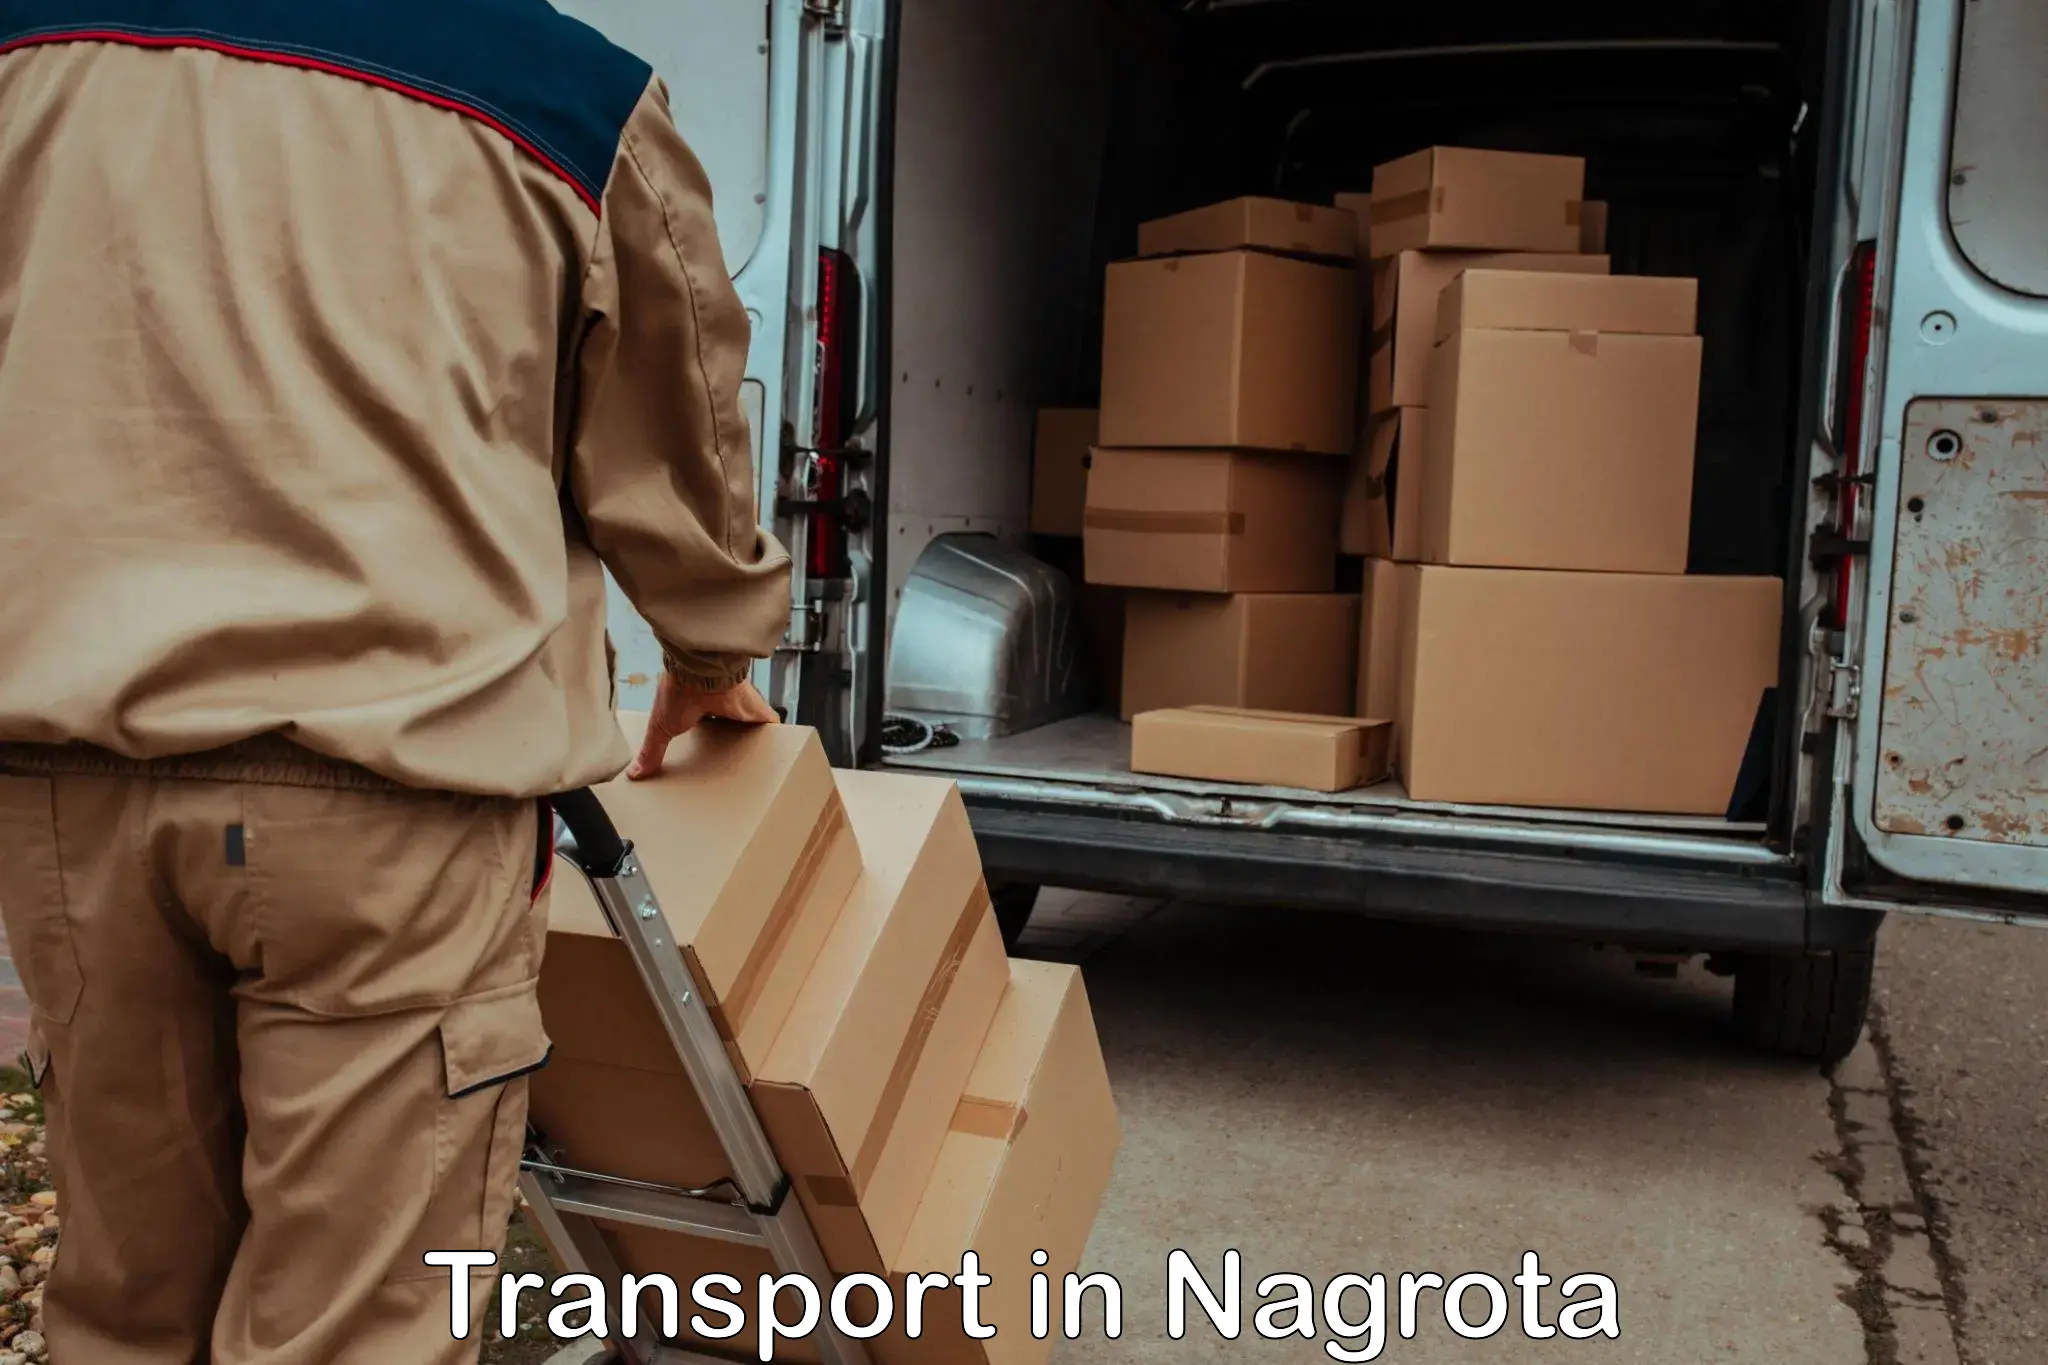 Interstate goods transport in Nagrota